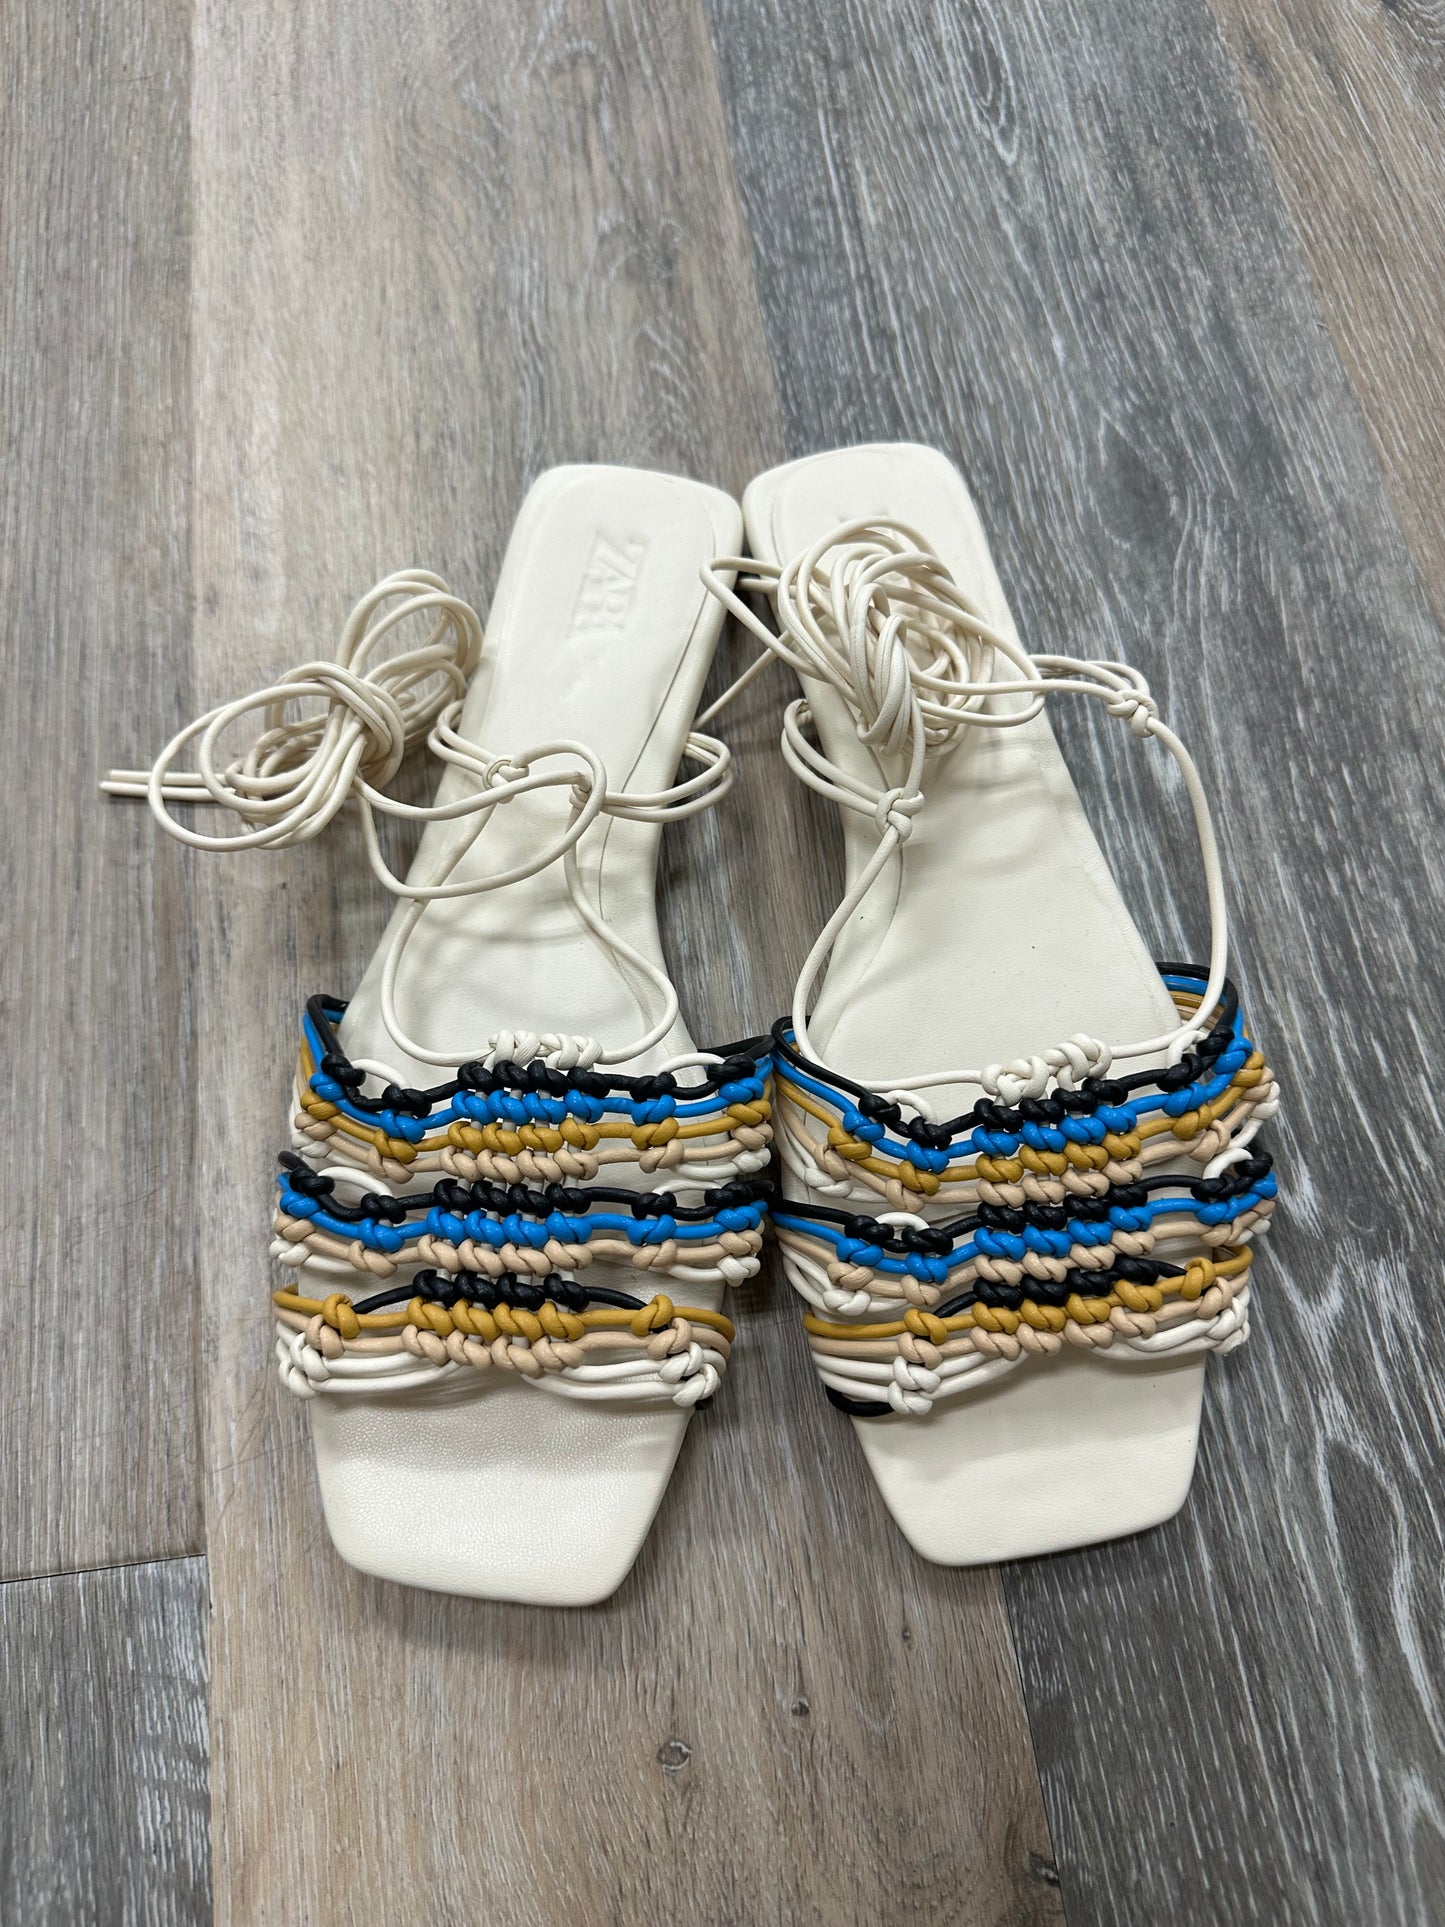 Sandals Flats By Zara  Size: 7.5